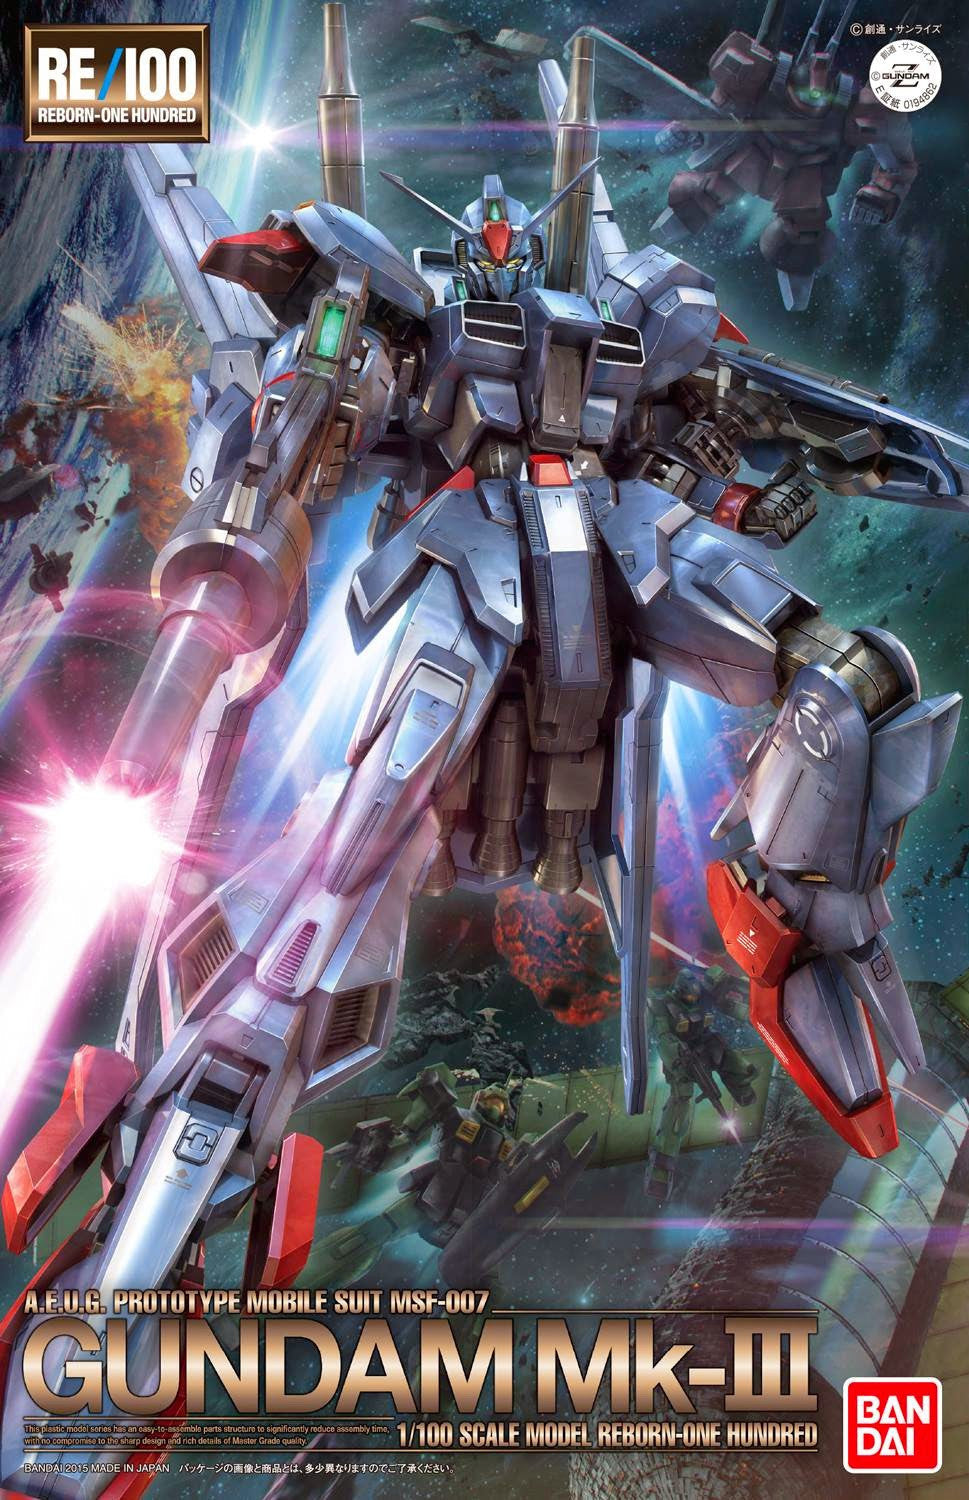 RE/100 #002 Gundam Mk-III